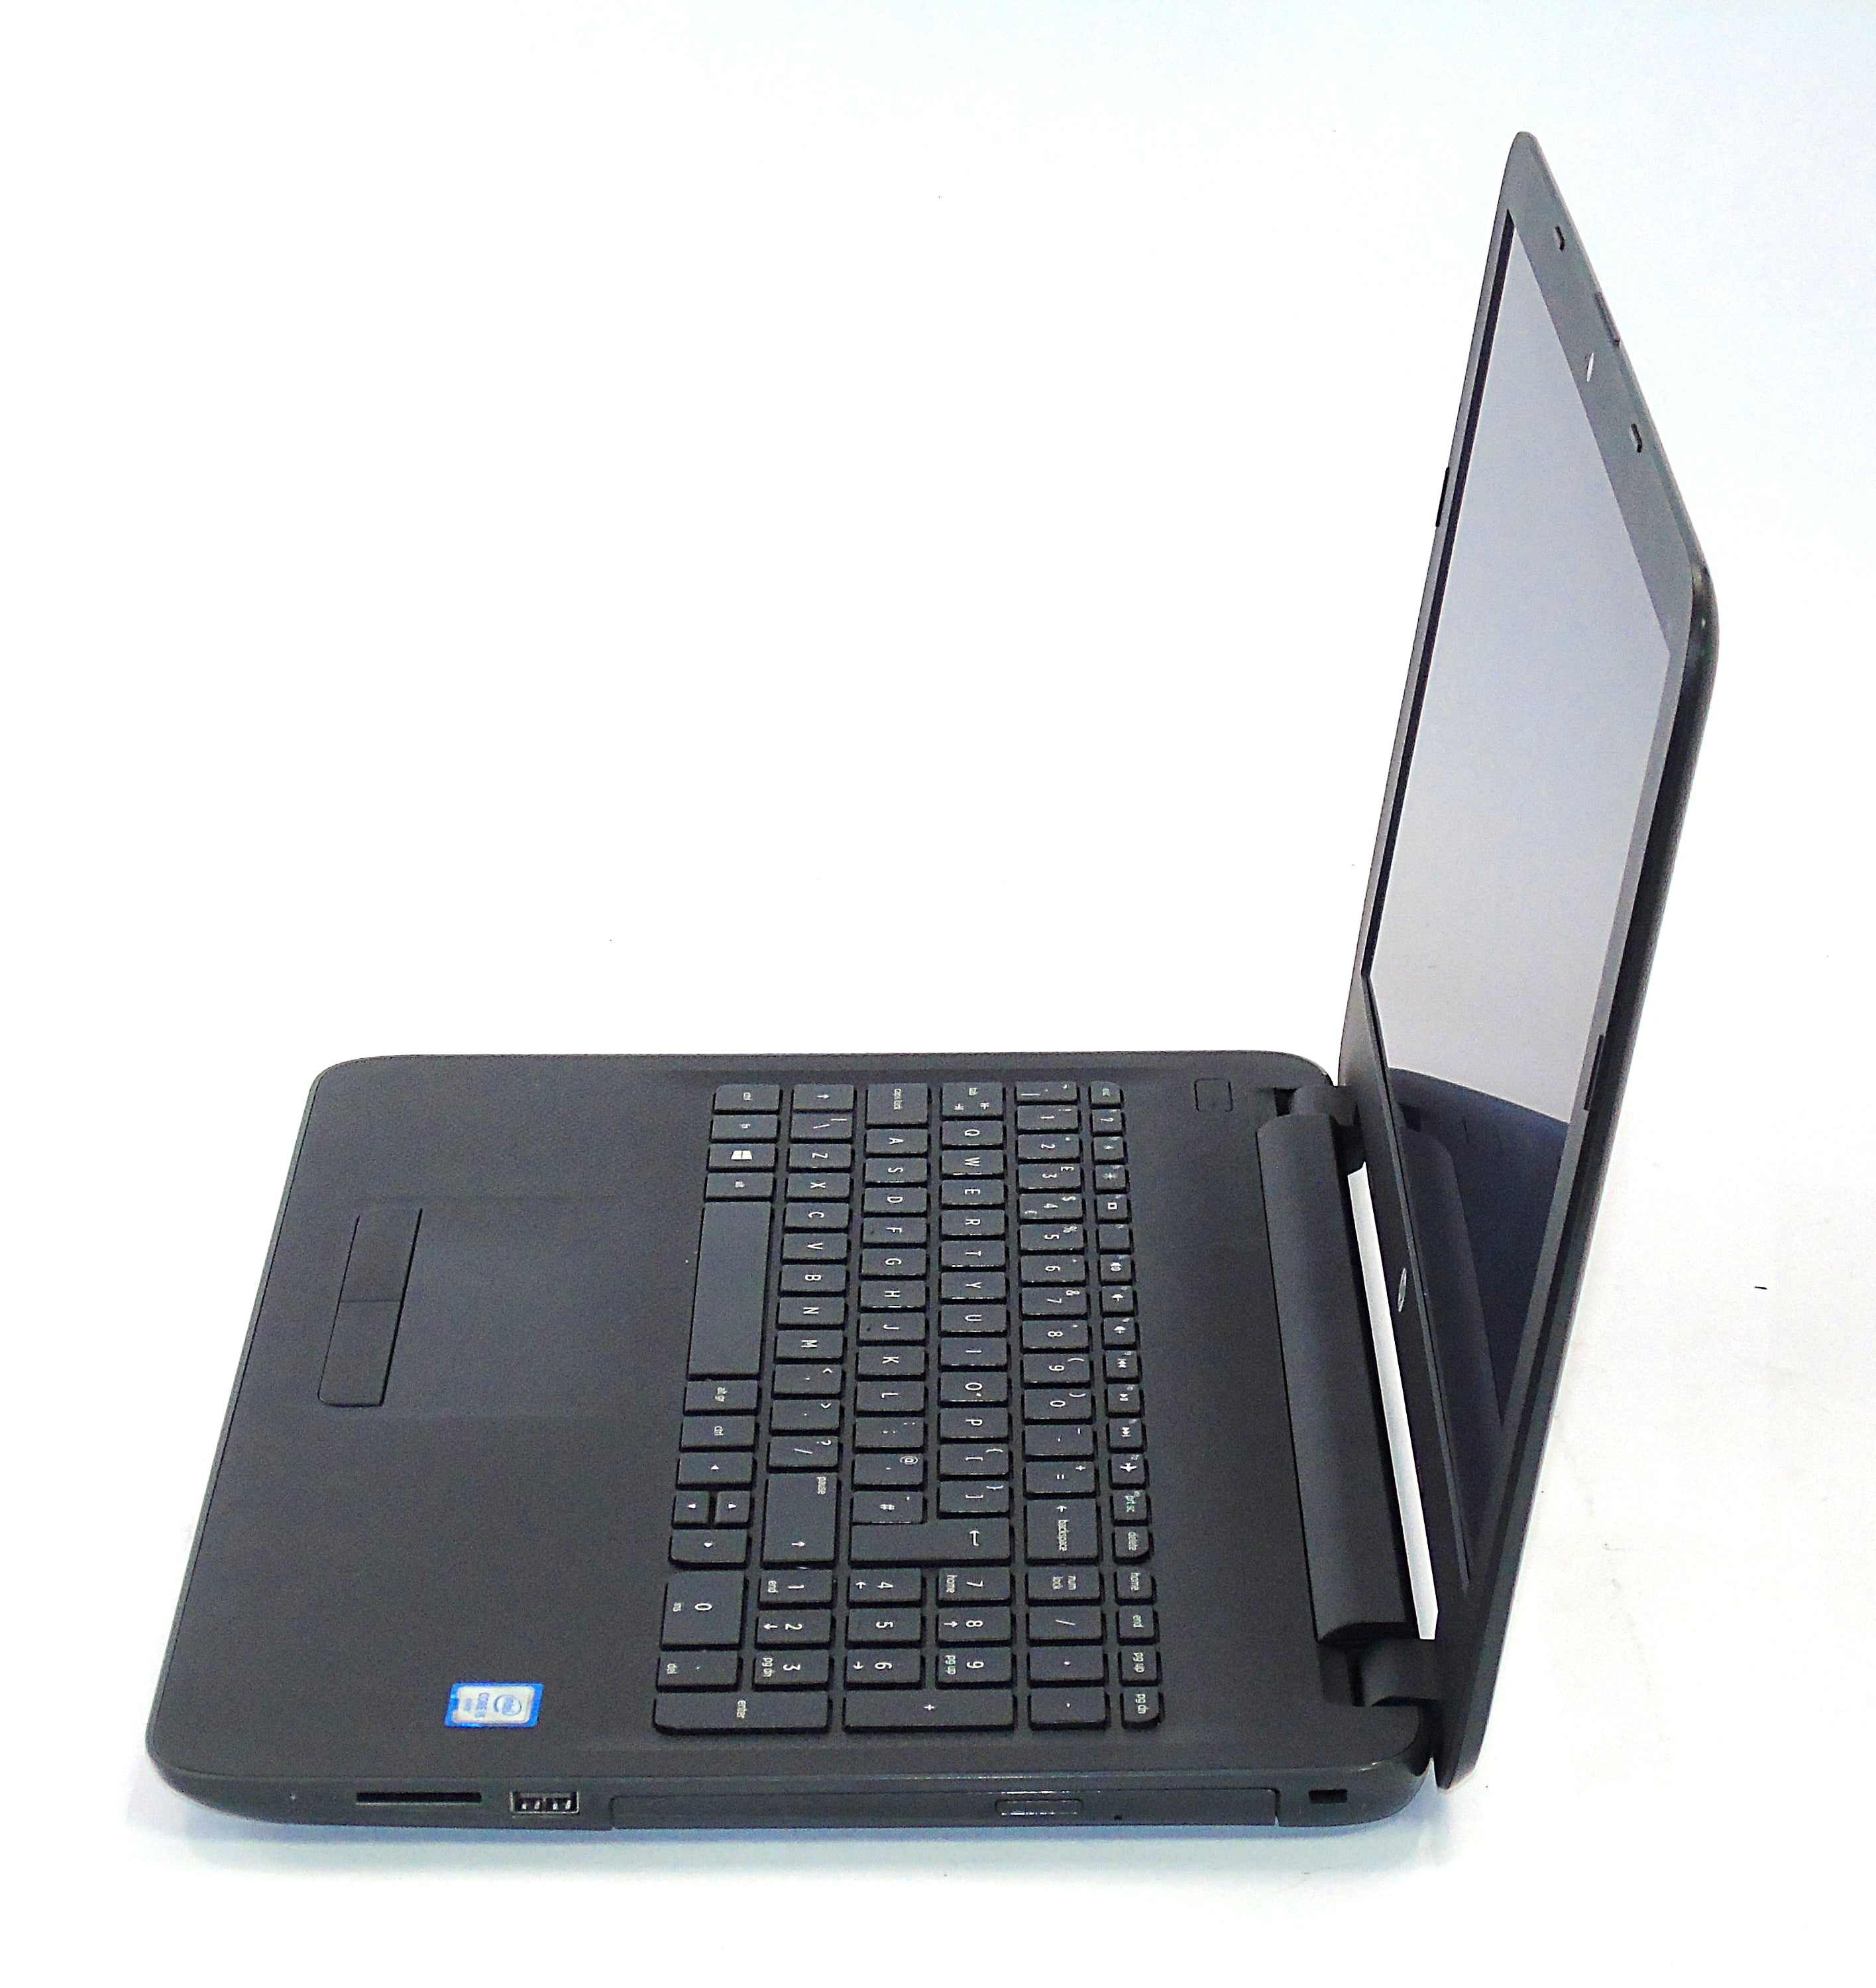 HP 250 G4 Notebook, 15.6" Intel Core i5, 8GB RAM, 256GB SSD